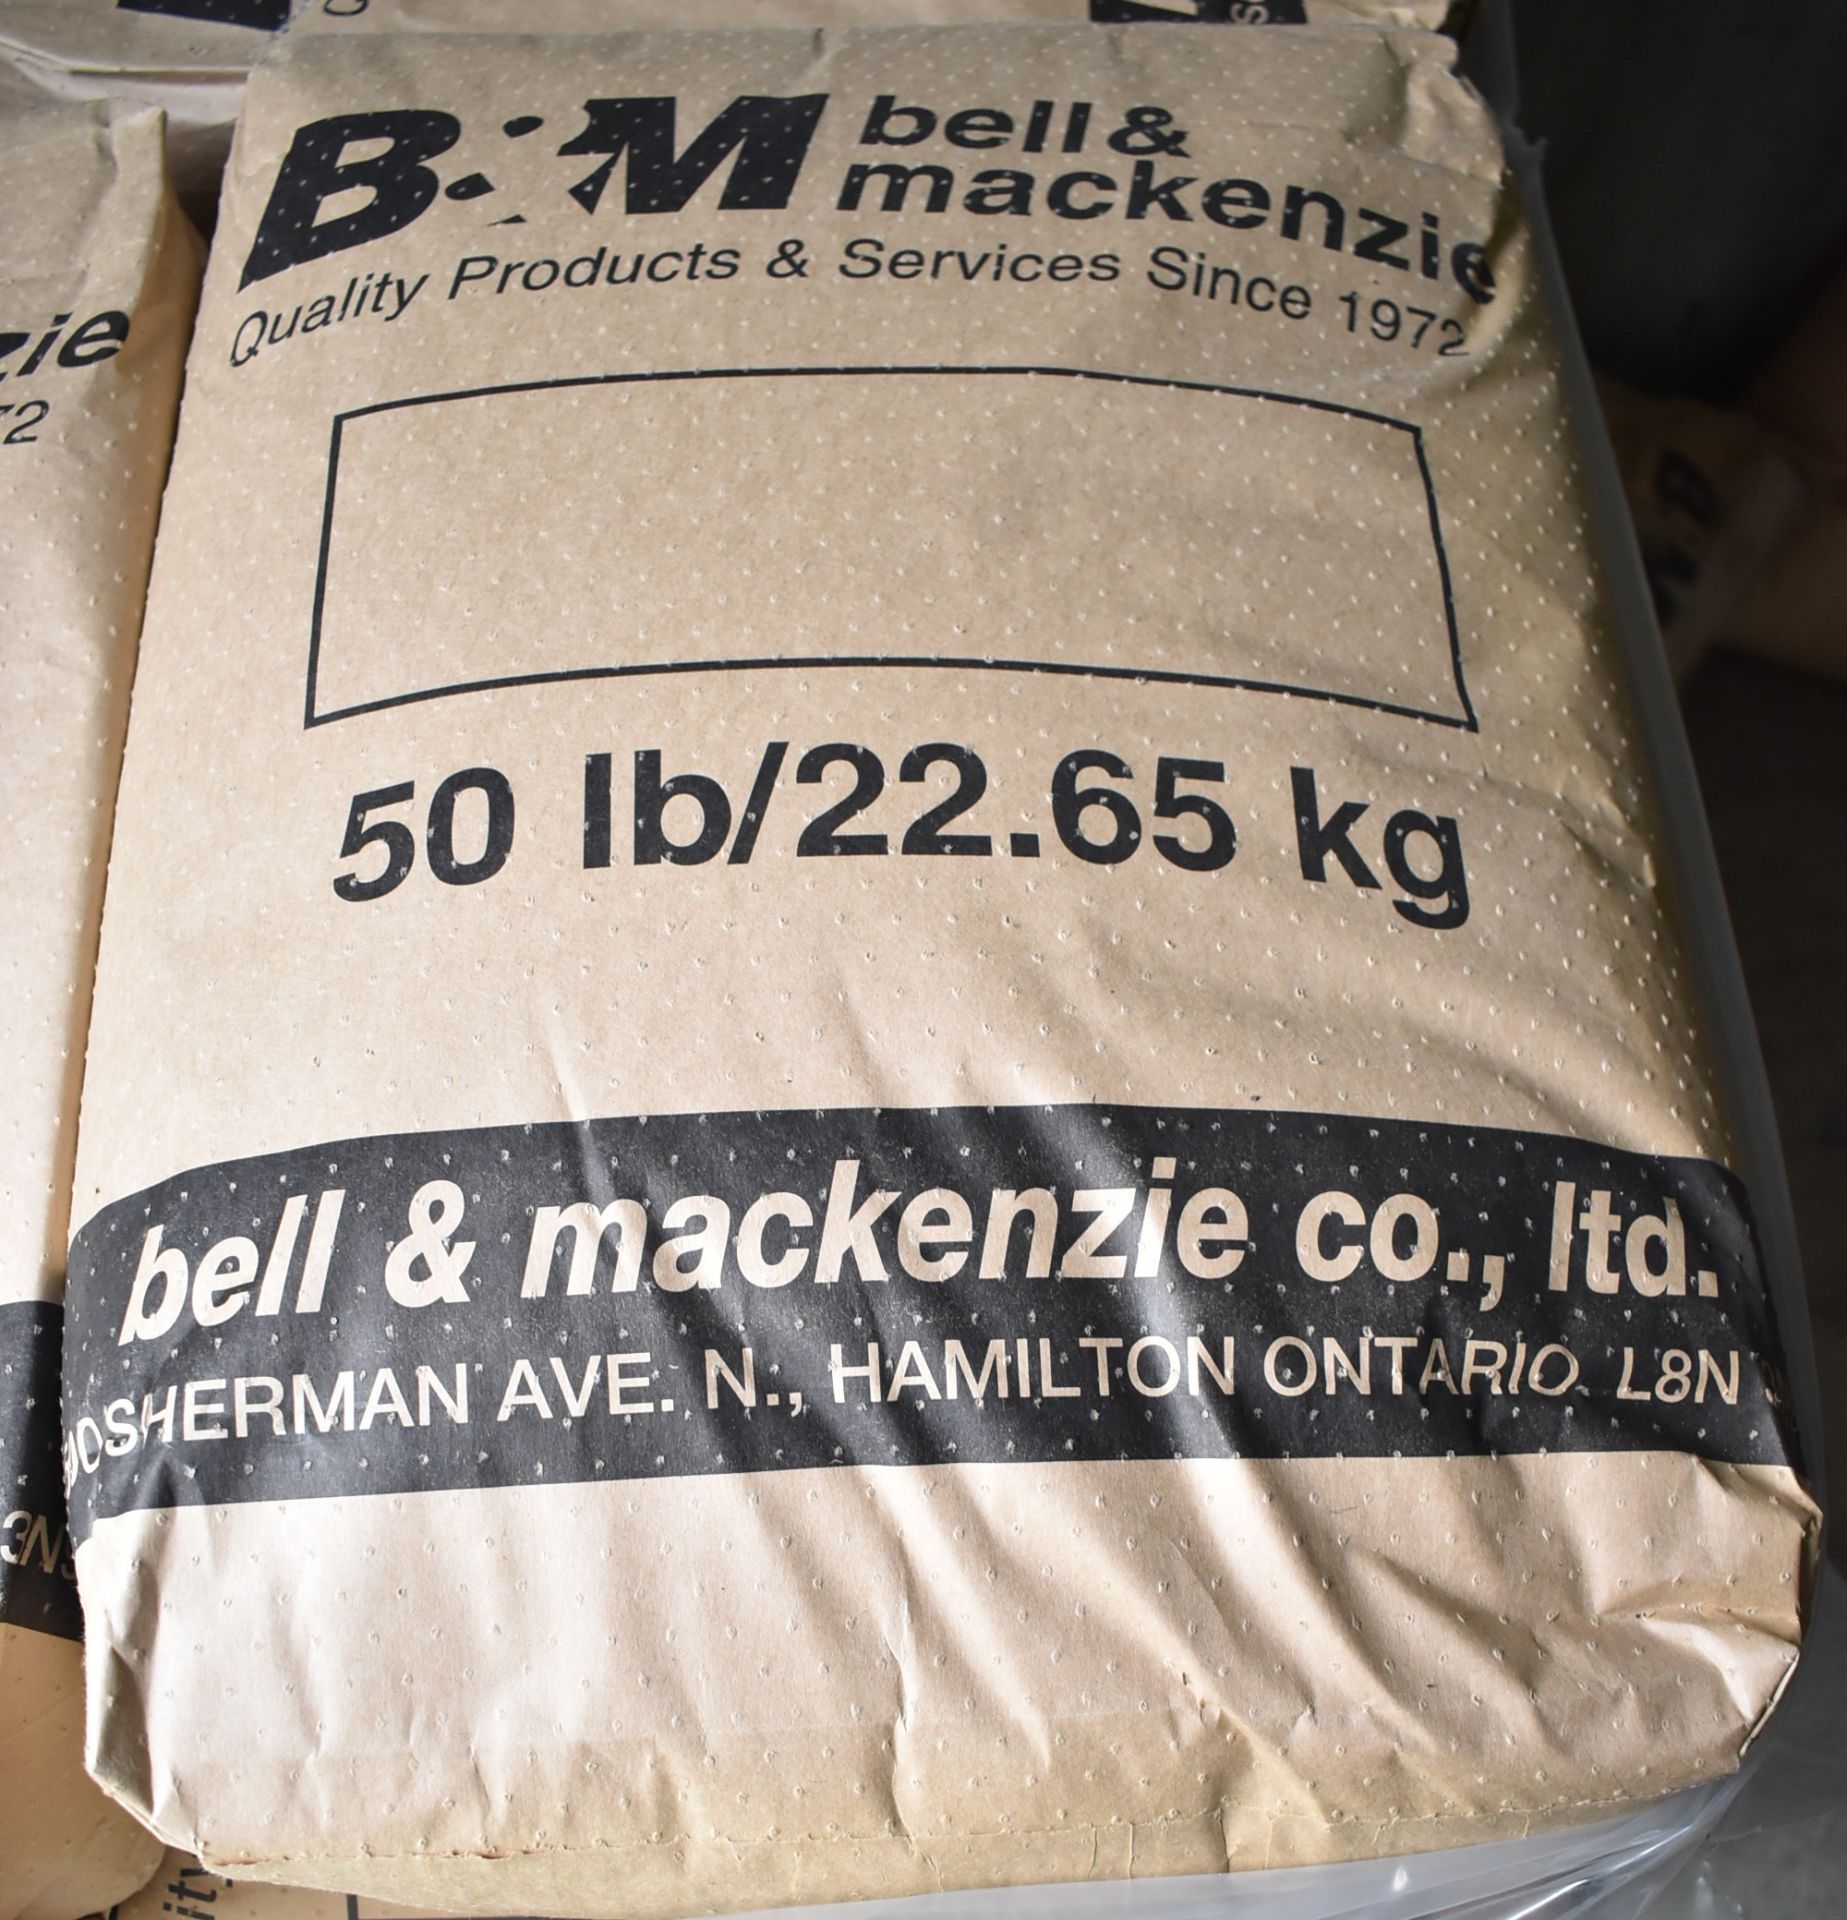 LOT/ SKID OF BELL & MACKENZIE 50 LB. BAGS OF SANDBLAST MEDIA (APPROX. 40 BAGS) - Image 2 of 2